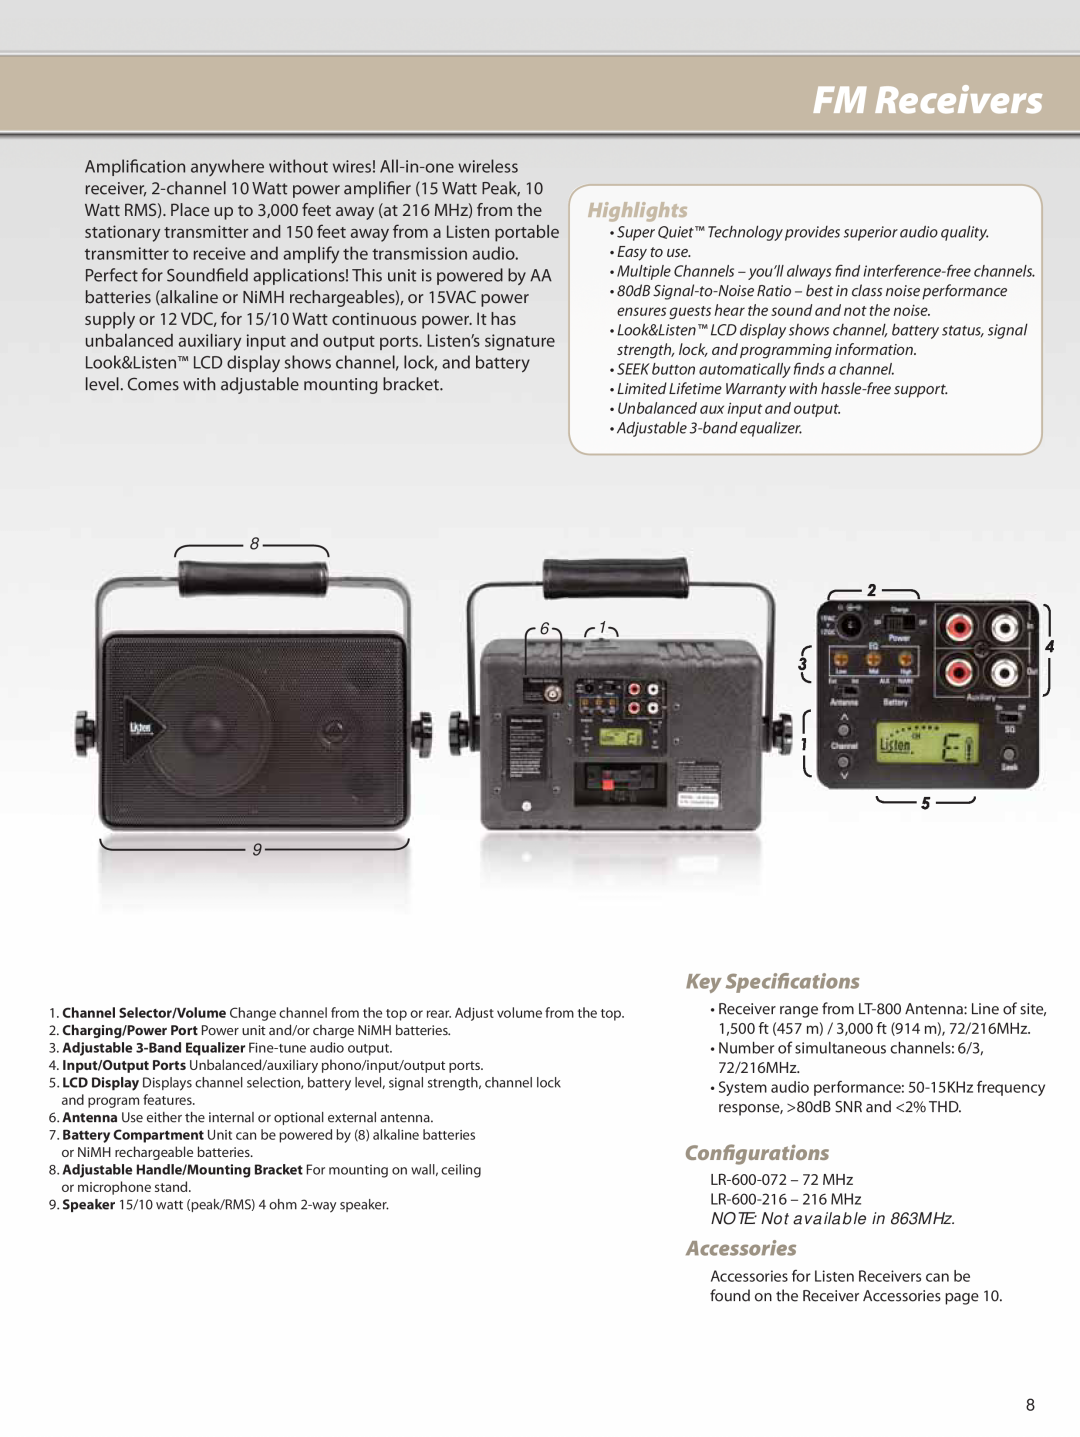 Listen Technologies LA-101 8 6 9, •Unbalanced aux input and output, •Adjustable 3-bandequalizer, 2 1 4 3 5, FM Receivers 